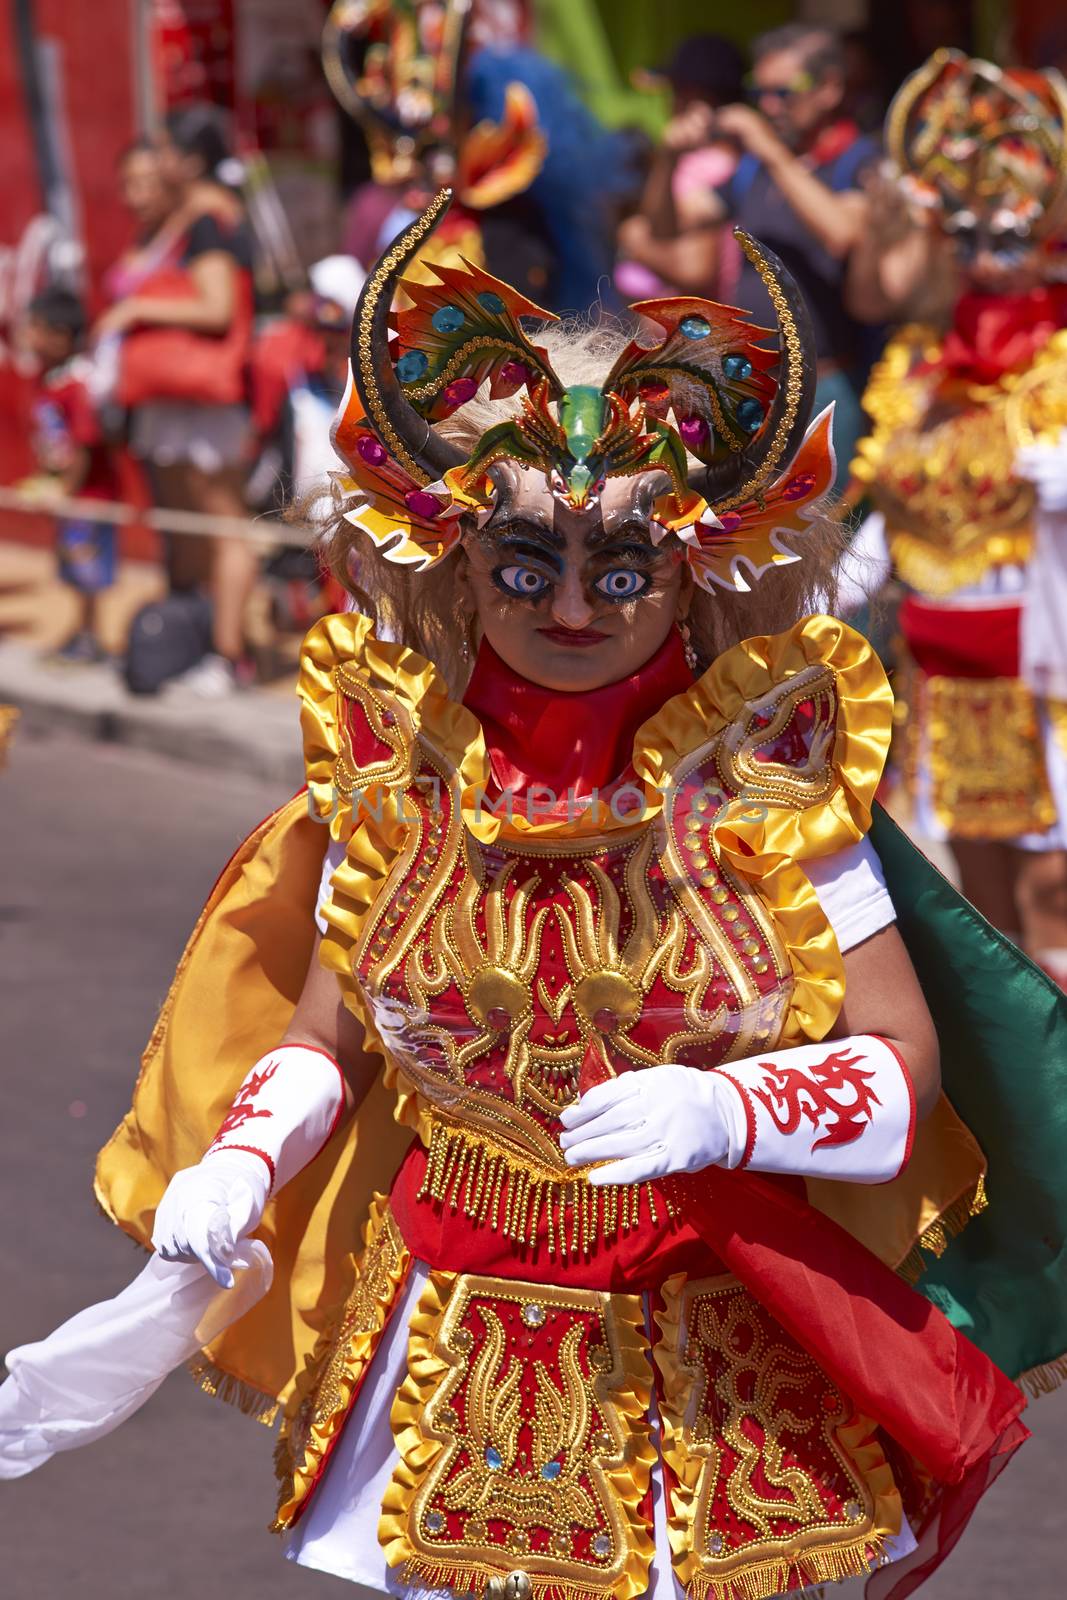 Masked man performing the Diablada (dance of the devil) as part of the Carnaval Andino con la Fuerza del Sol in Arica, Chile. The dance originates in Oruro, Bolivia.